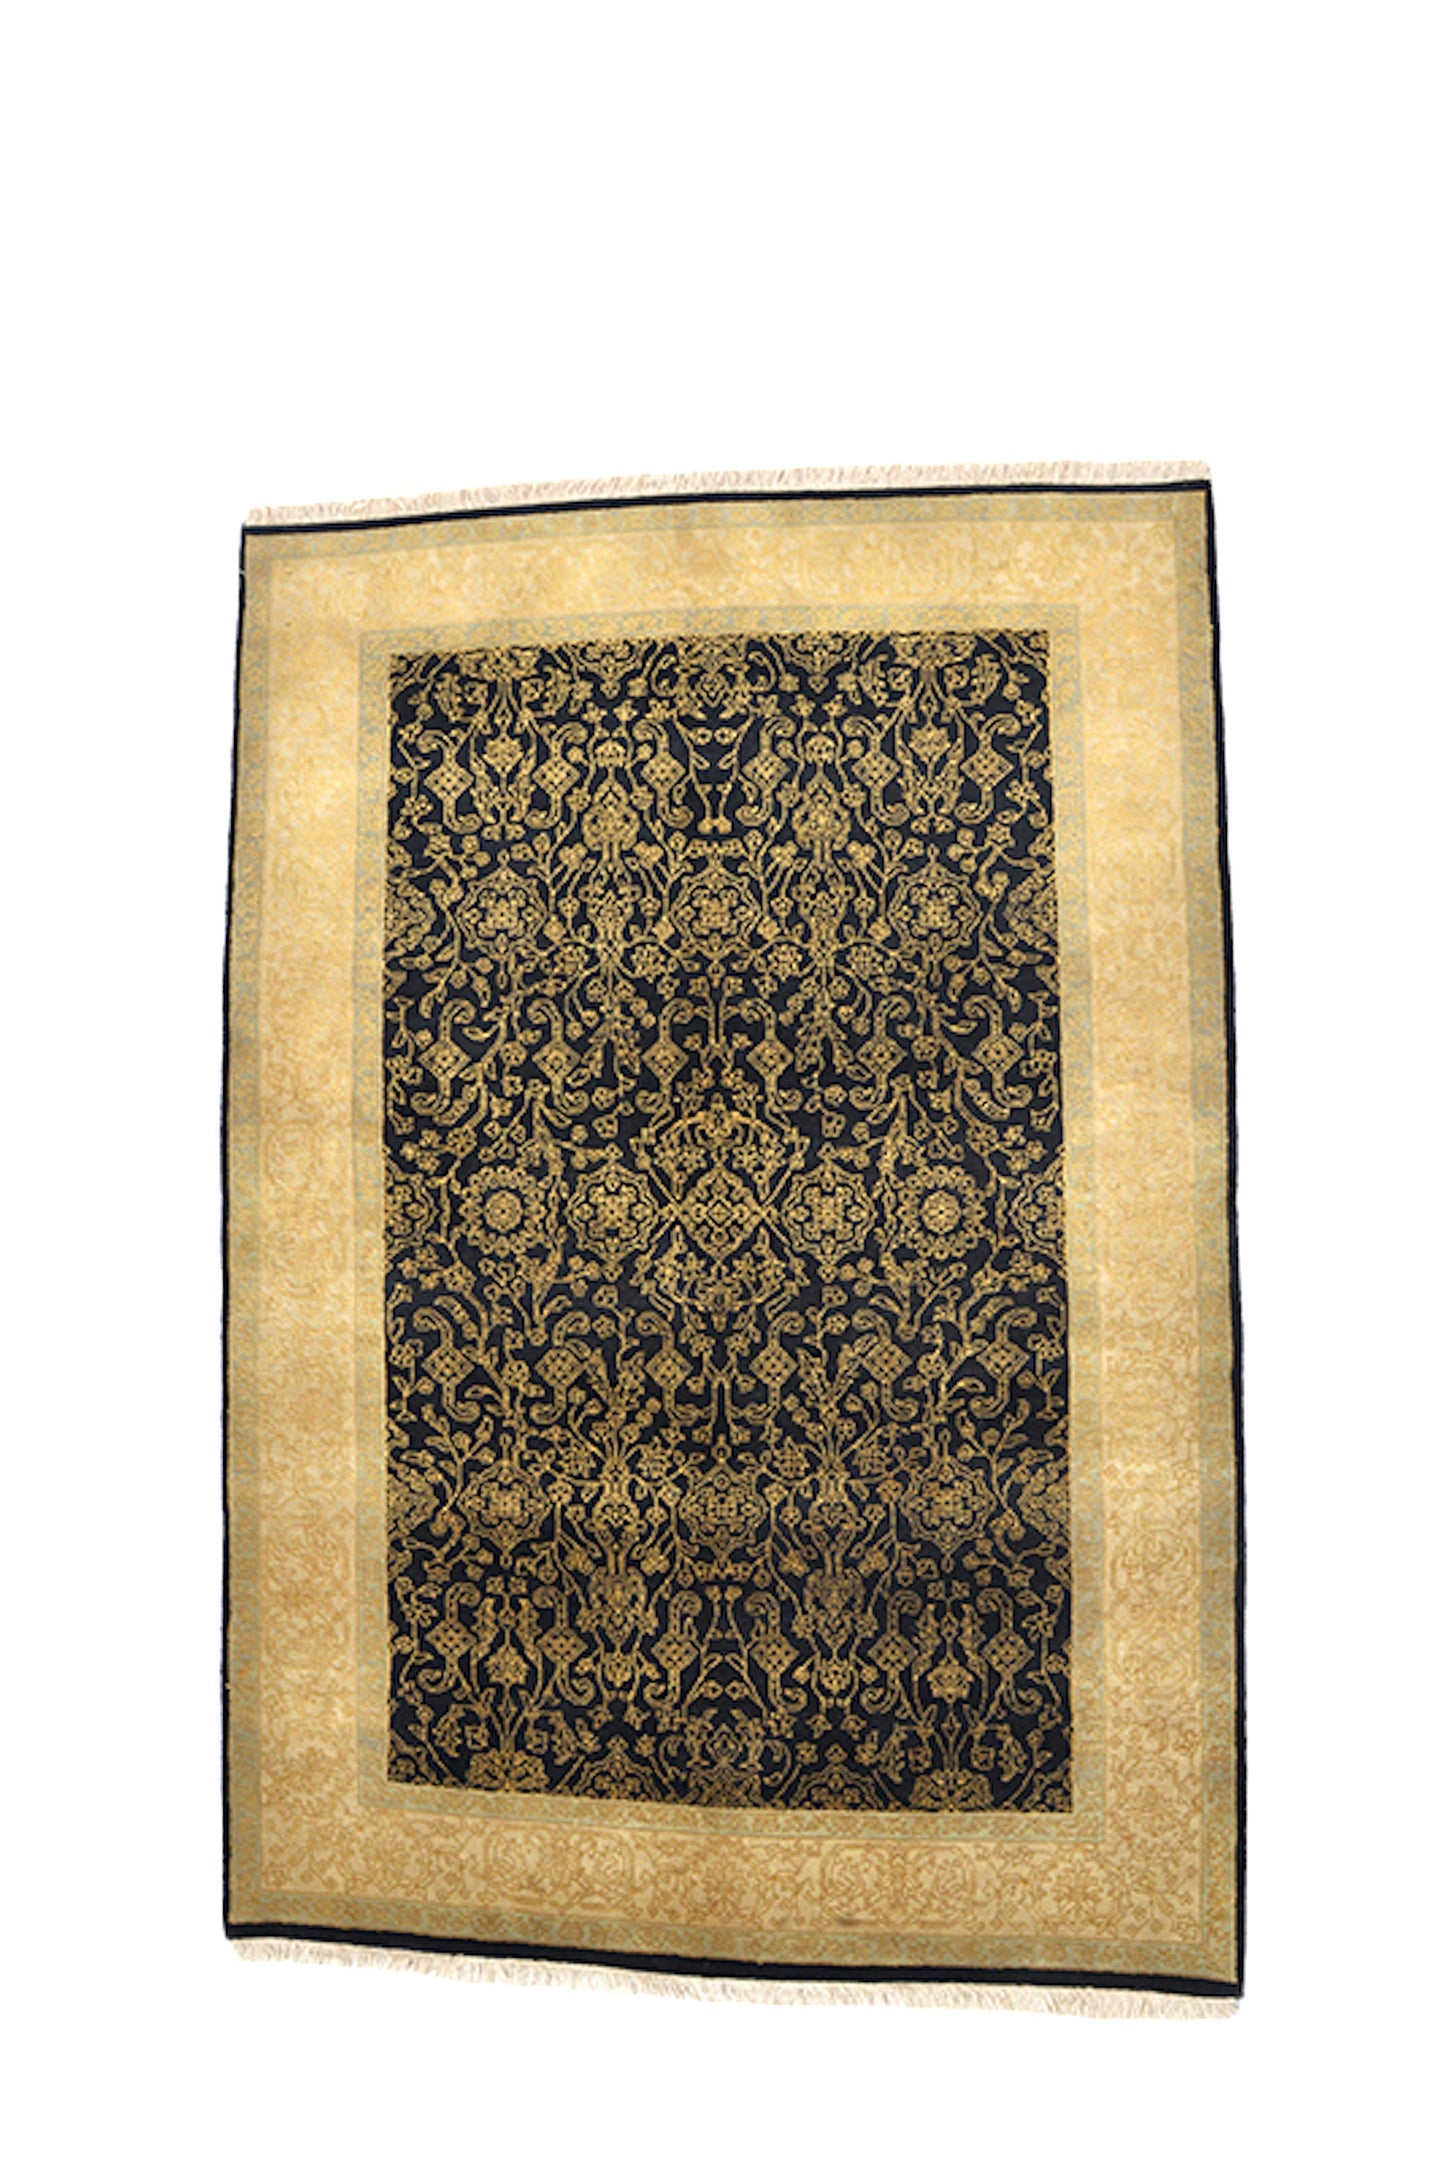 6 x 6 Feet Black Gold Medallion Rug | Handmade Area Rug | Oriental Persian Caucasian Rug | Living Room Rug | Wool Tribal Vintage